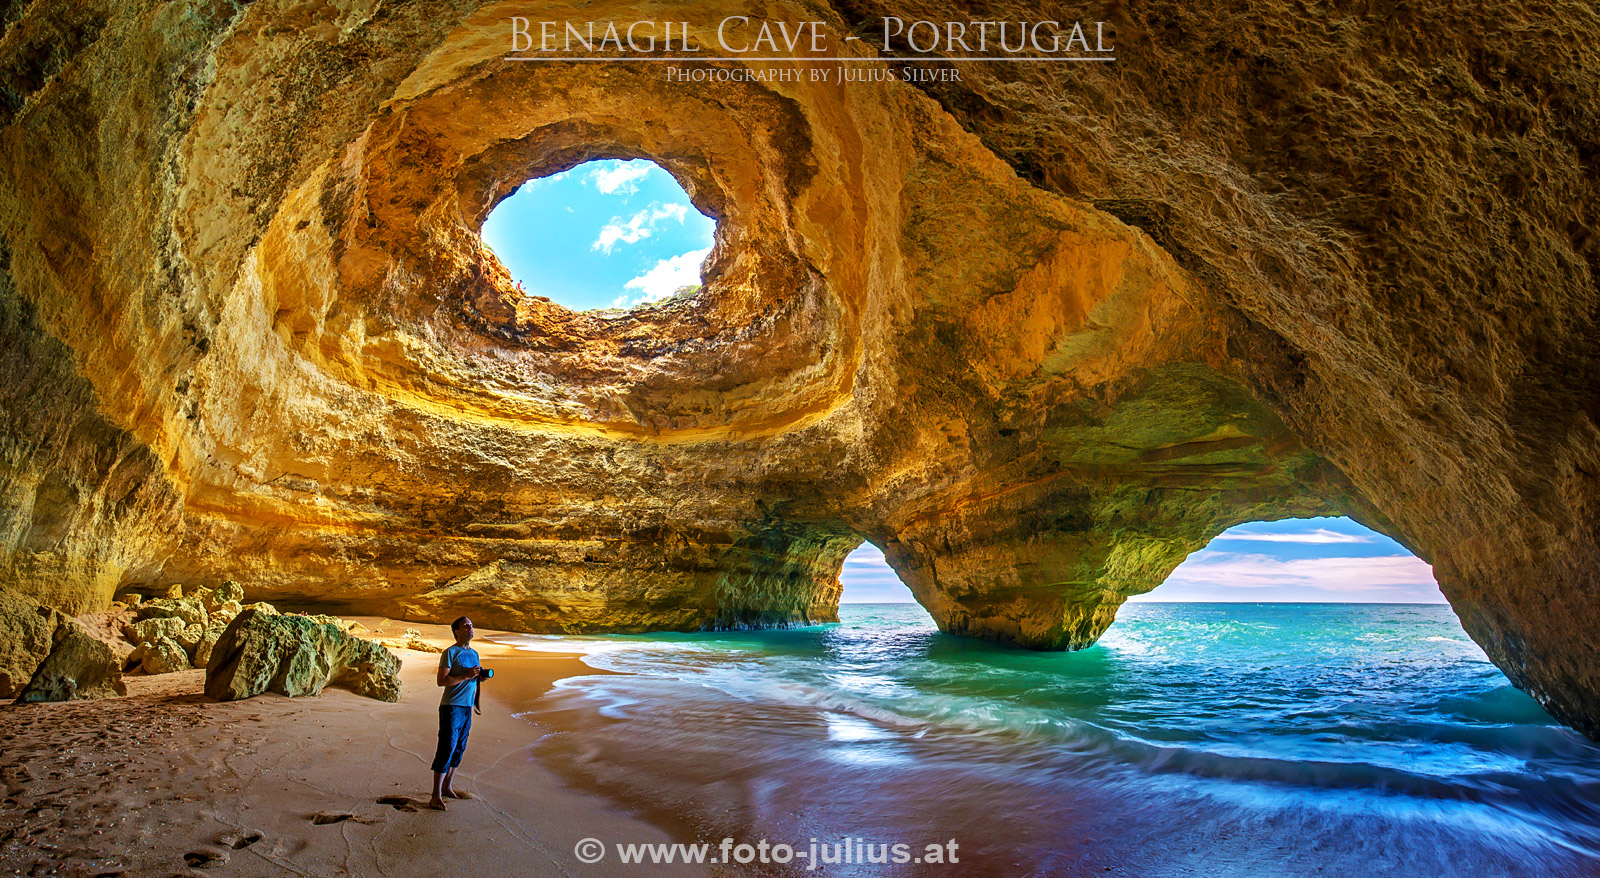 138a_Algarve_Benagil_Caves_Grutas_de_Benagil.jpg, 767kB